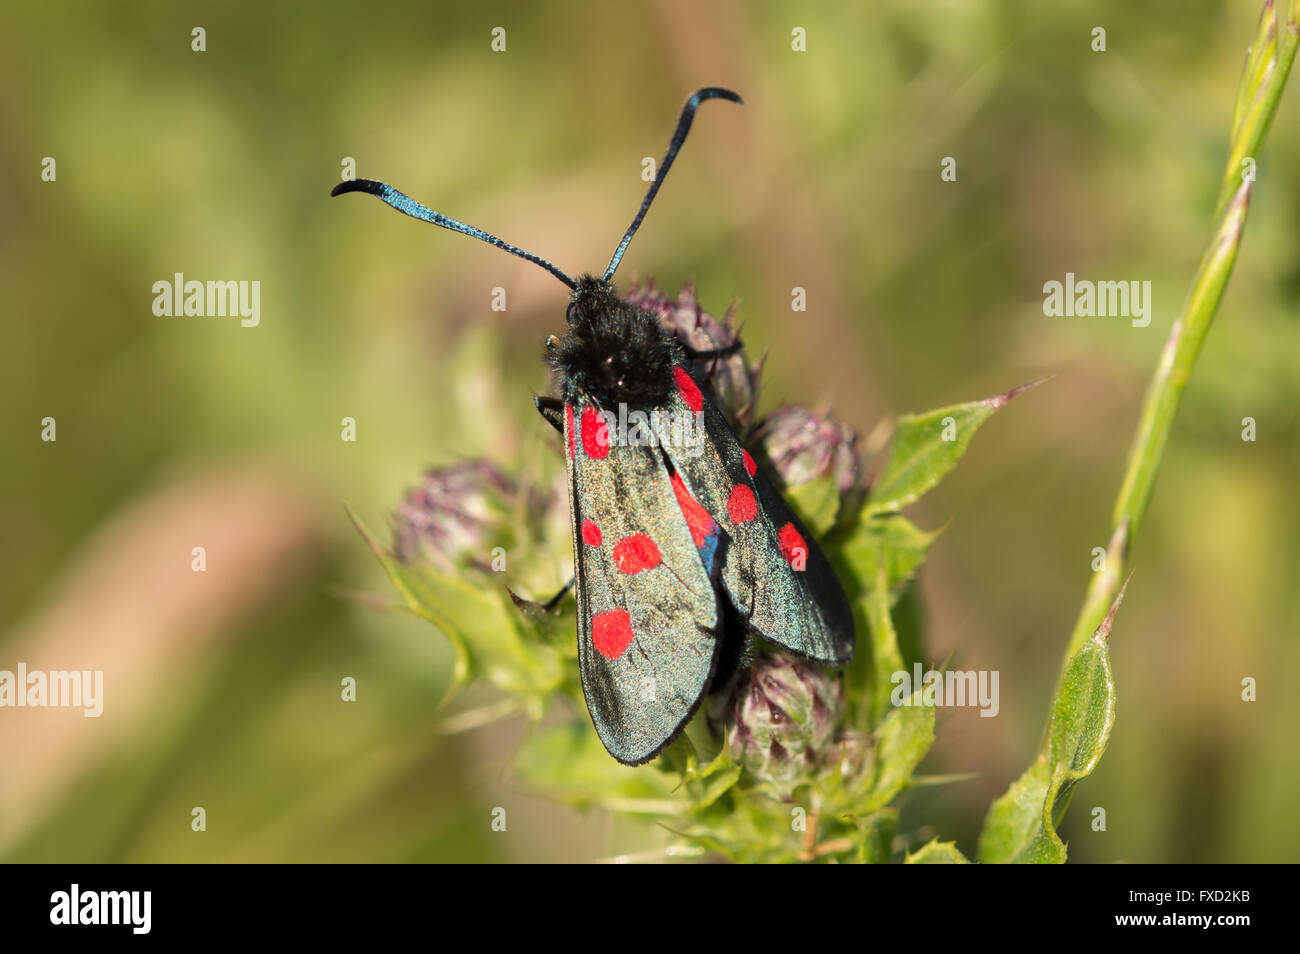 A Narrow-bordered five-spot Burnet moth (Zygaena lonicerae) on a thistle. Stock Photo